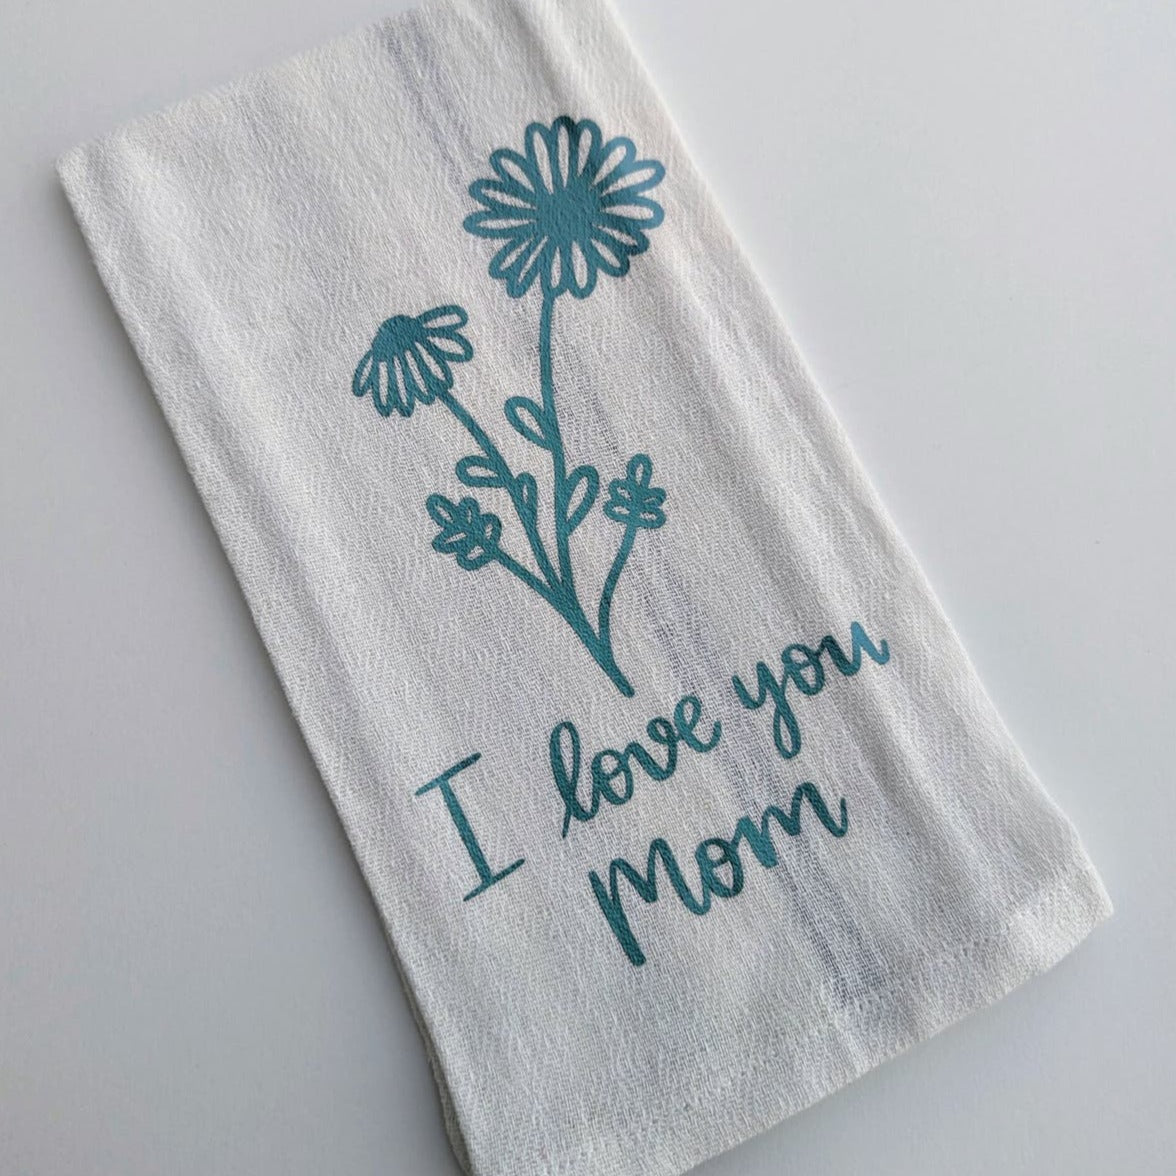 Sentimental Mothers Day Tea Towels